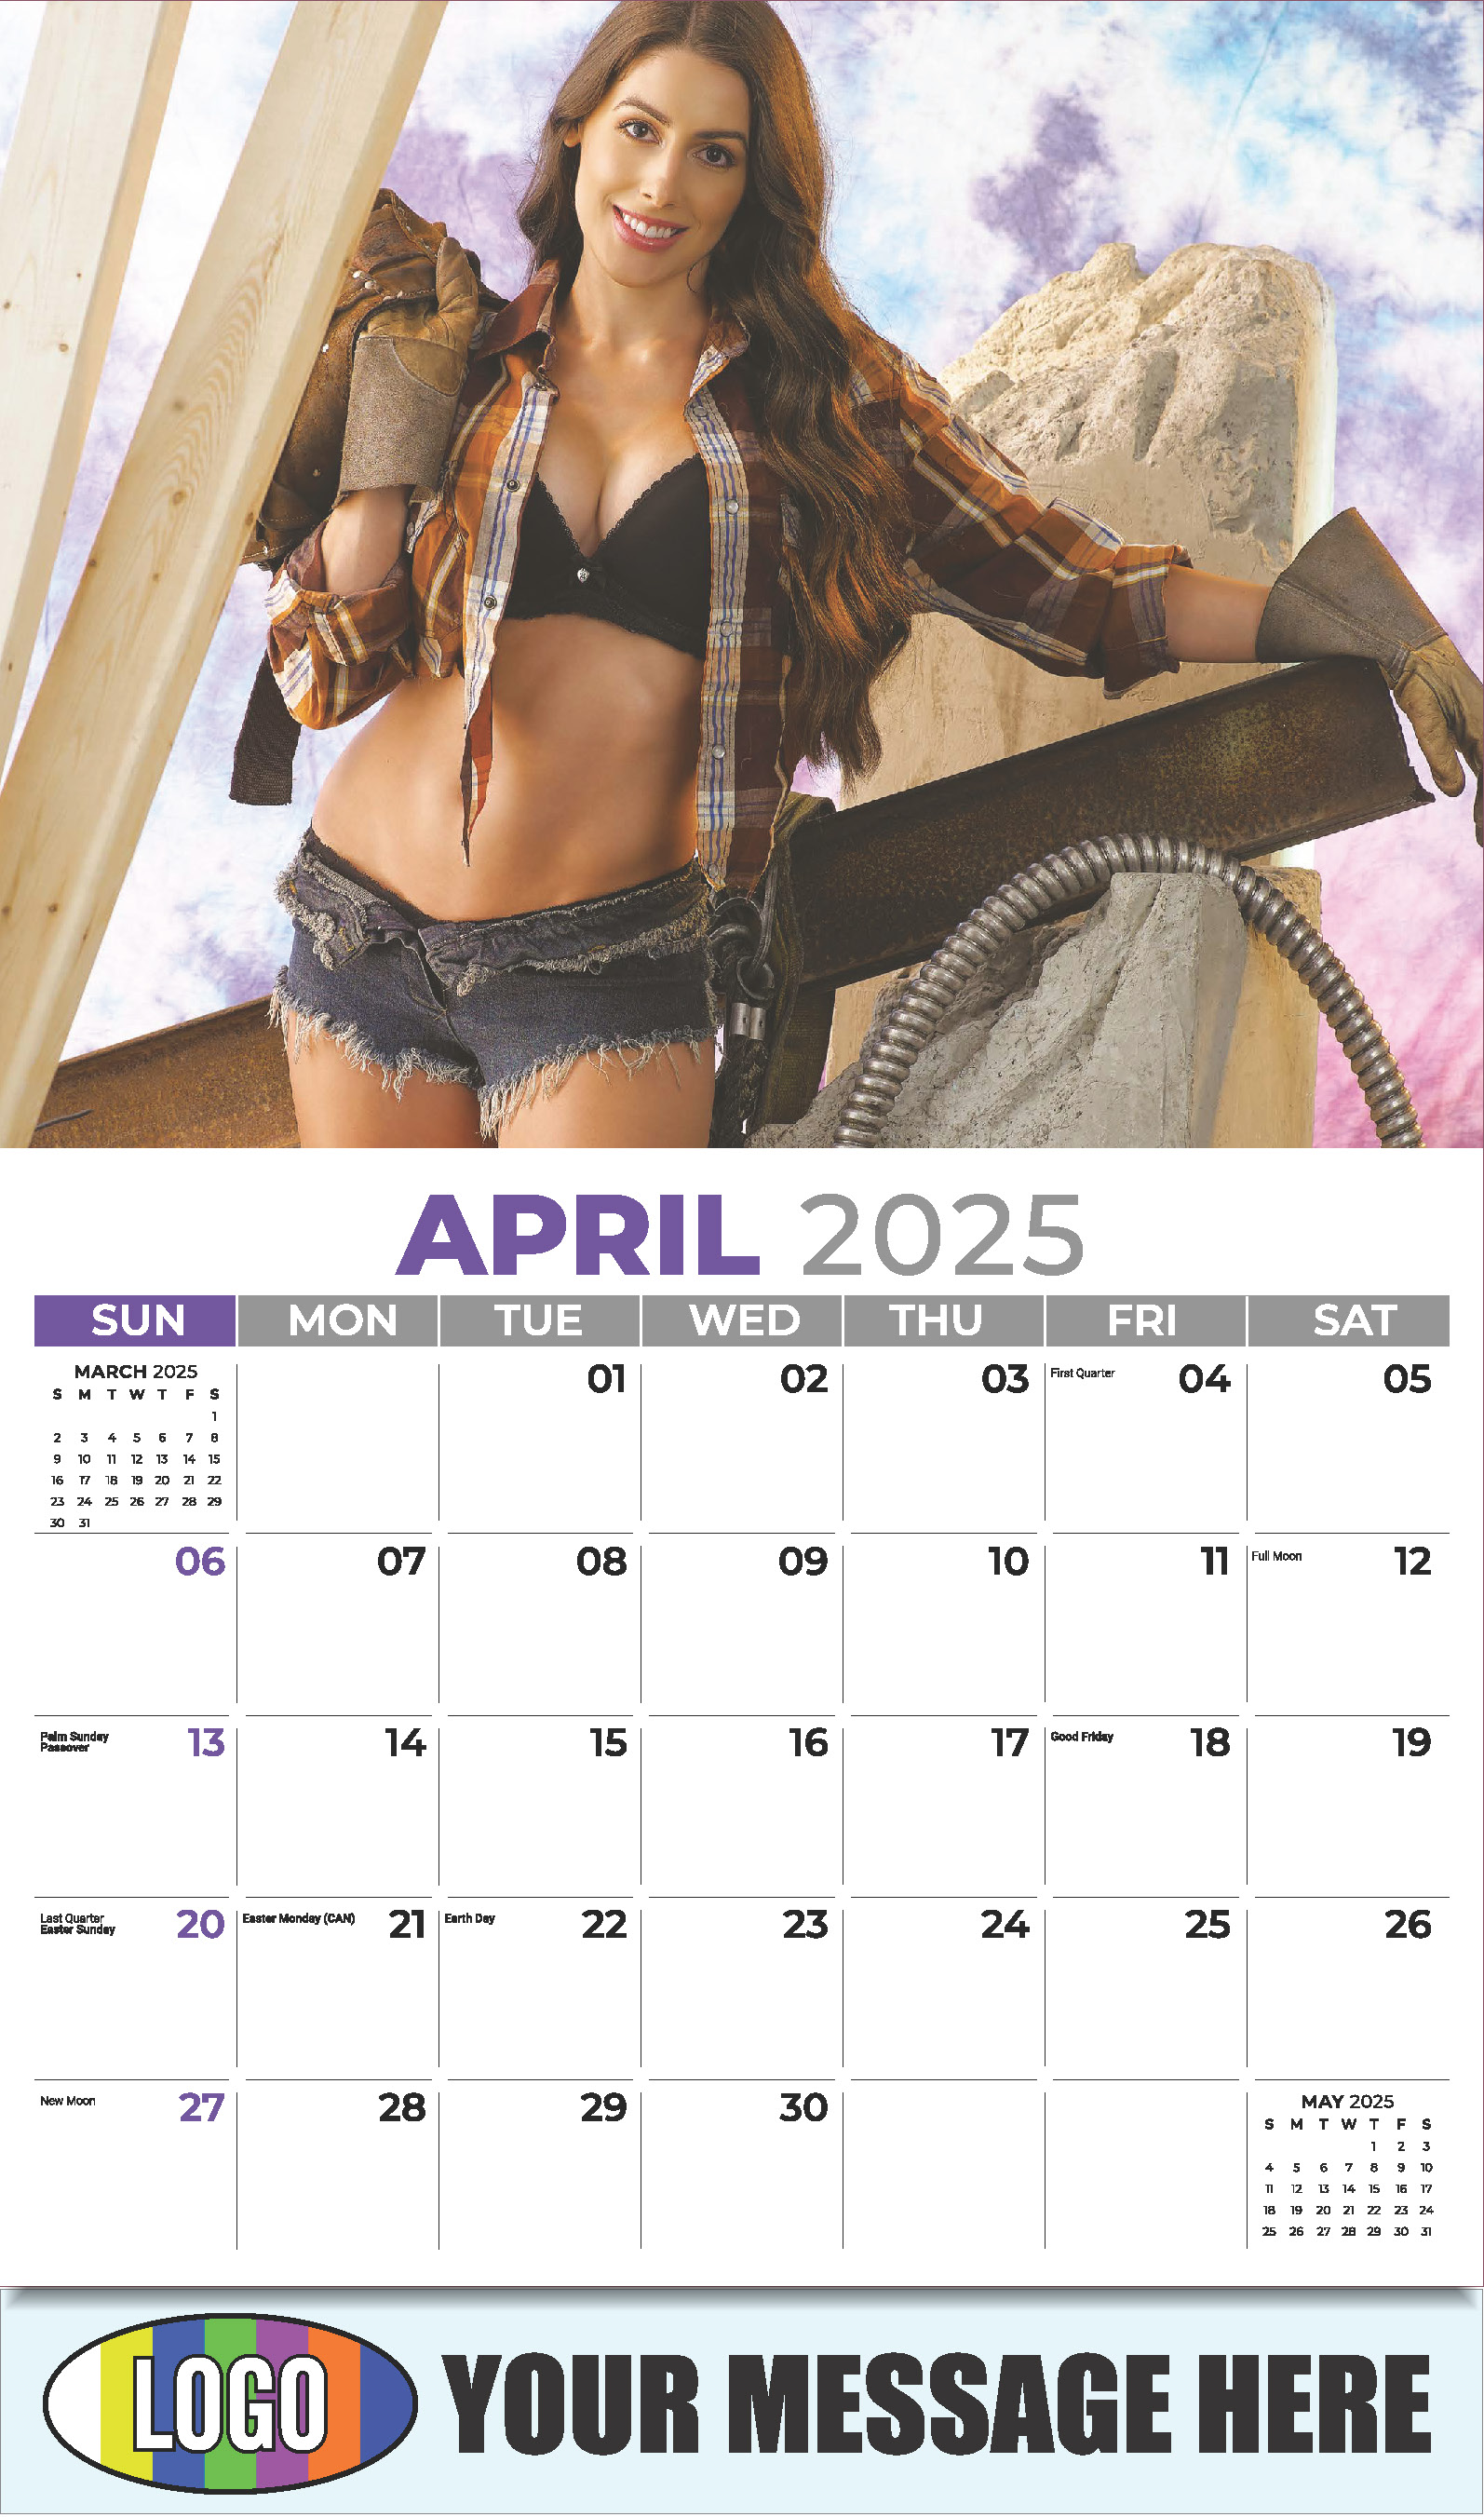 Building Bades 2025 Business Promotional Calendar - April